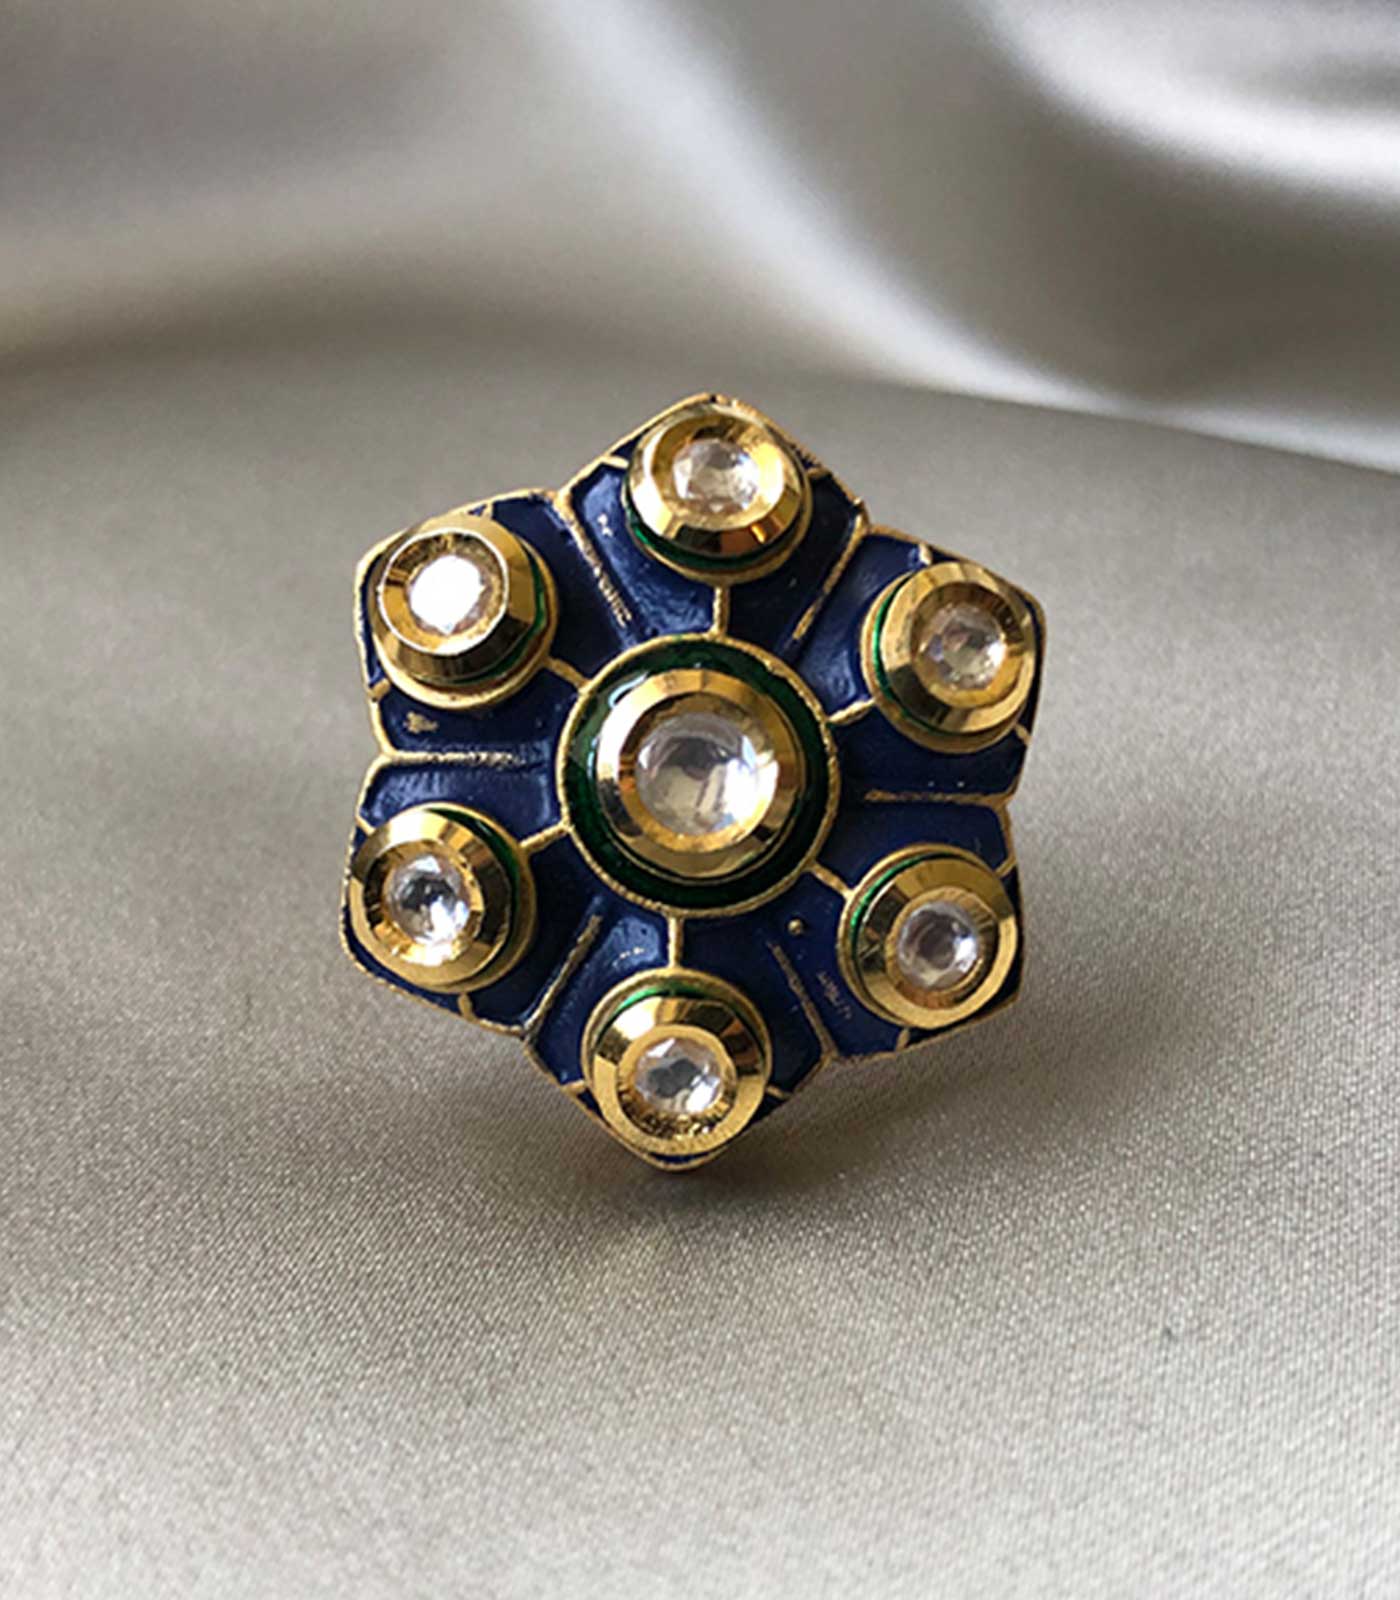 Sukkhi Spectacular Kundan Gold Plated Meenakari Ring Worn By Karisma K -  Sukkhi.com